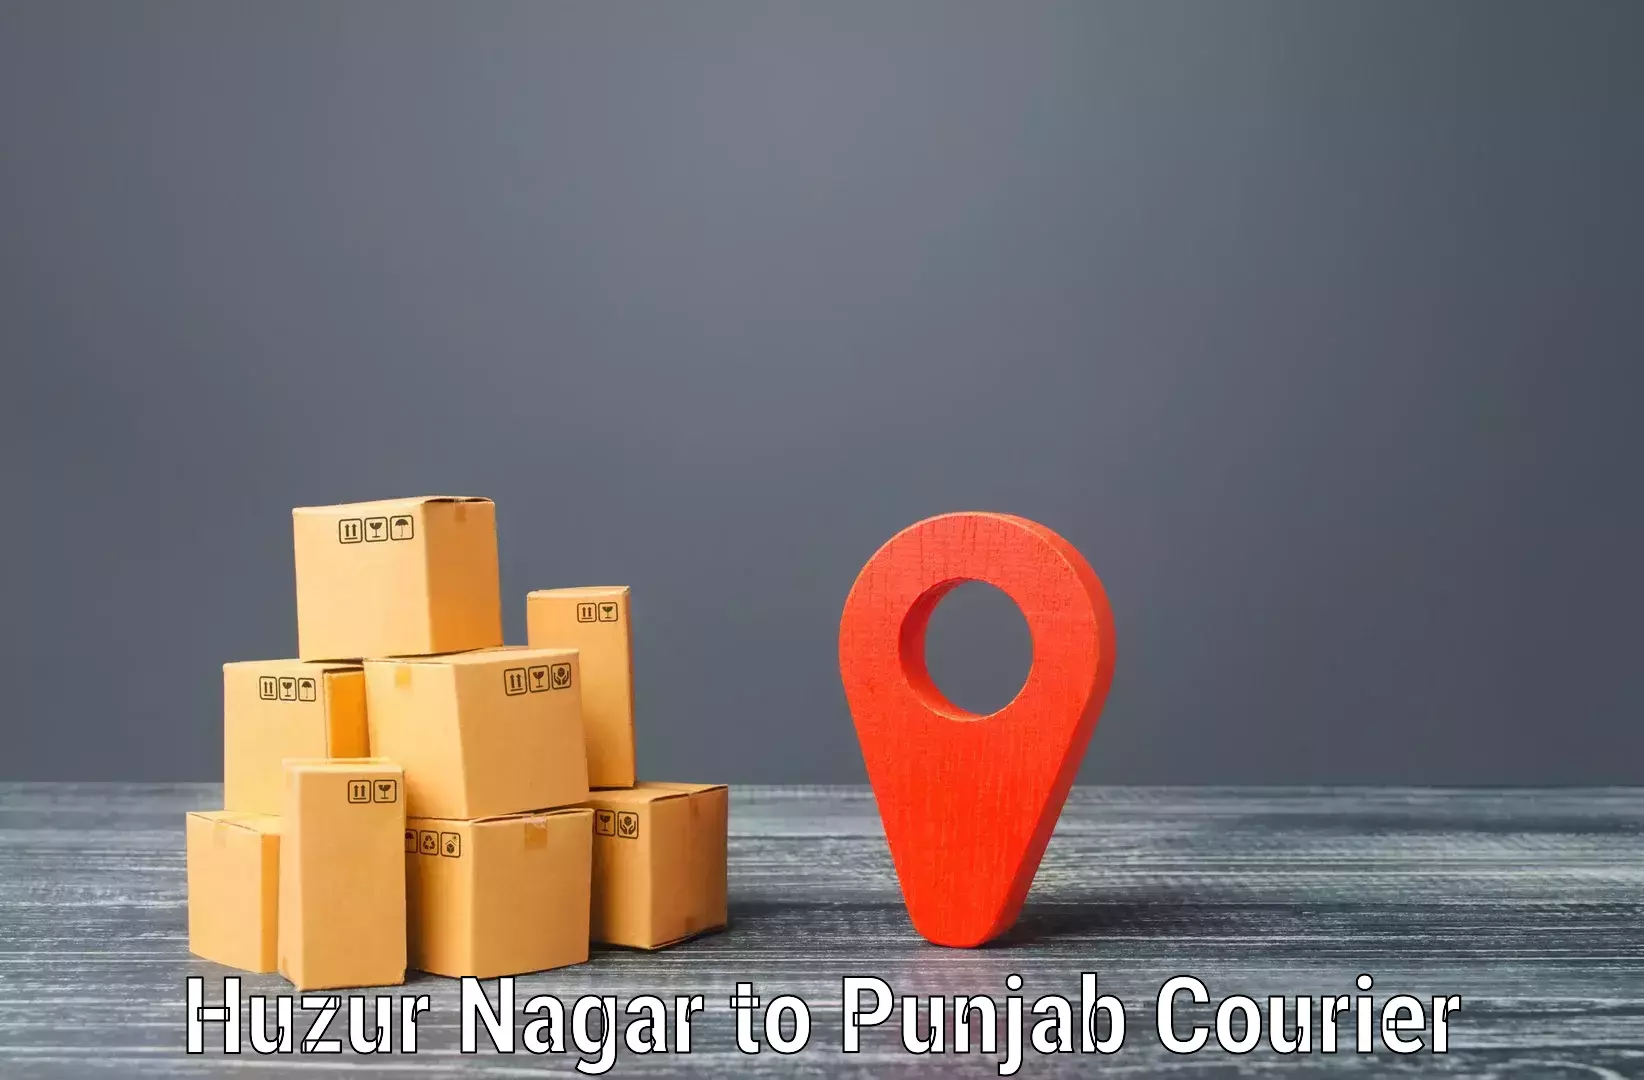 Express delivery capabilities Huzur Nagar to Kapurthala